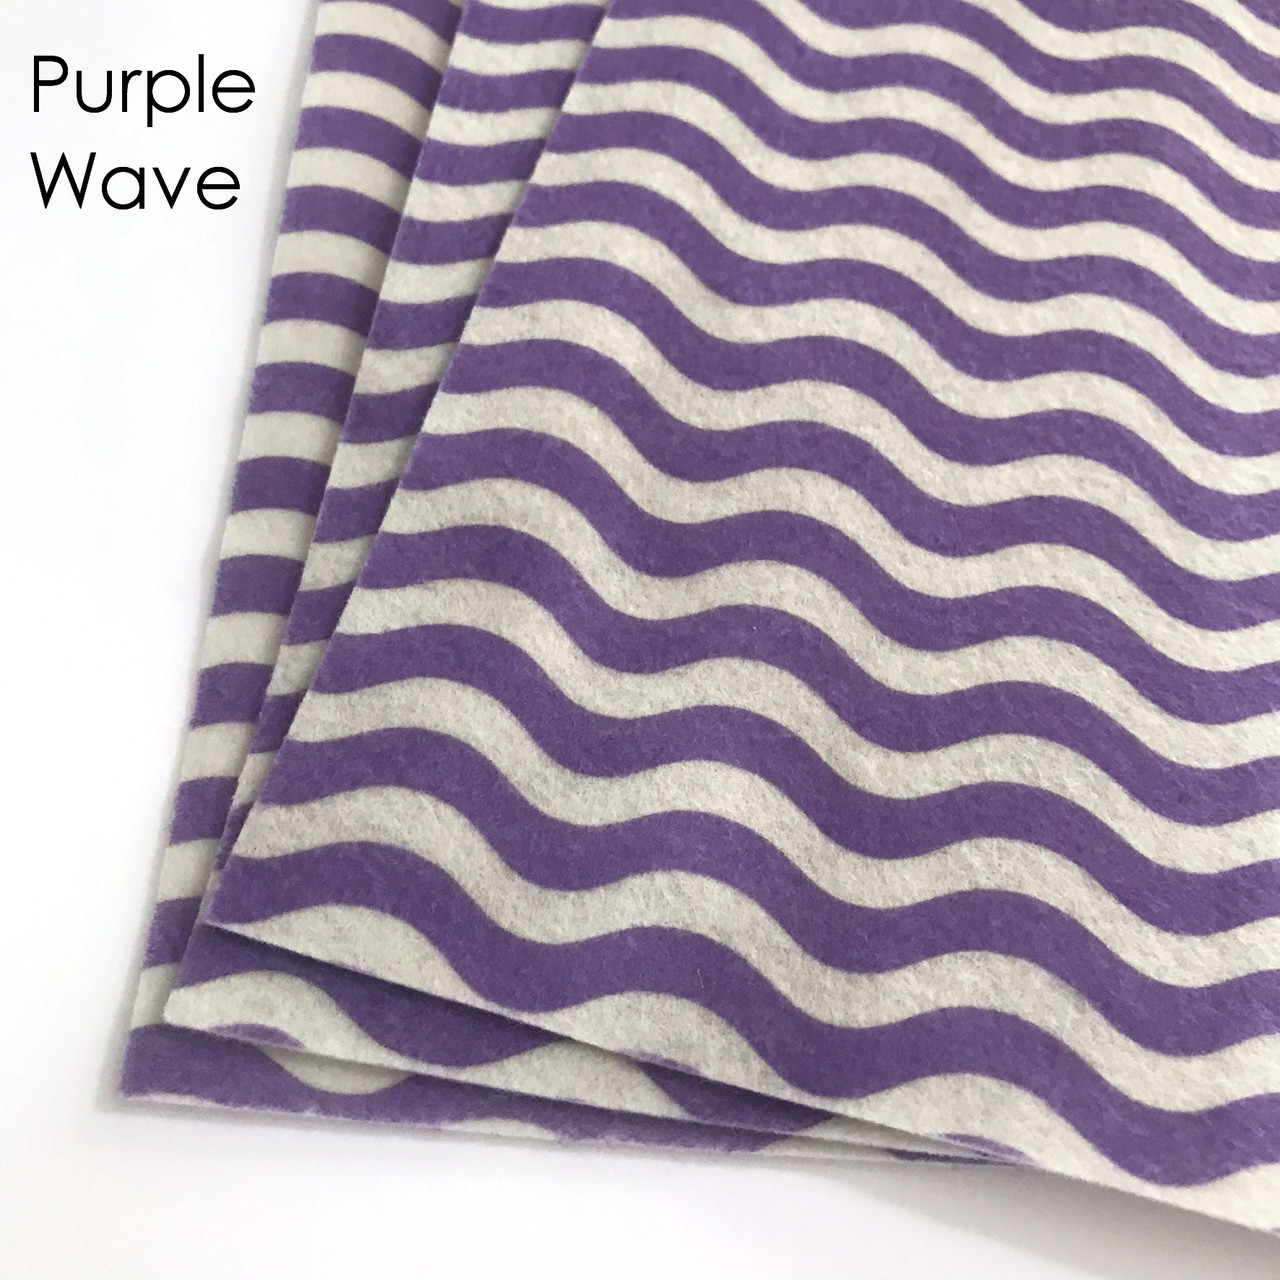 Craft Felt 9/12'' Purple by Cosplay Supplies